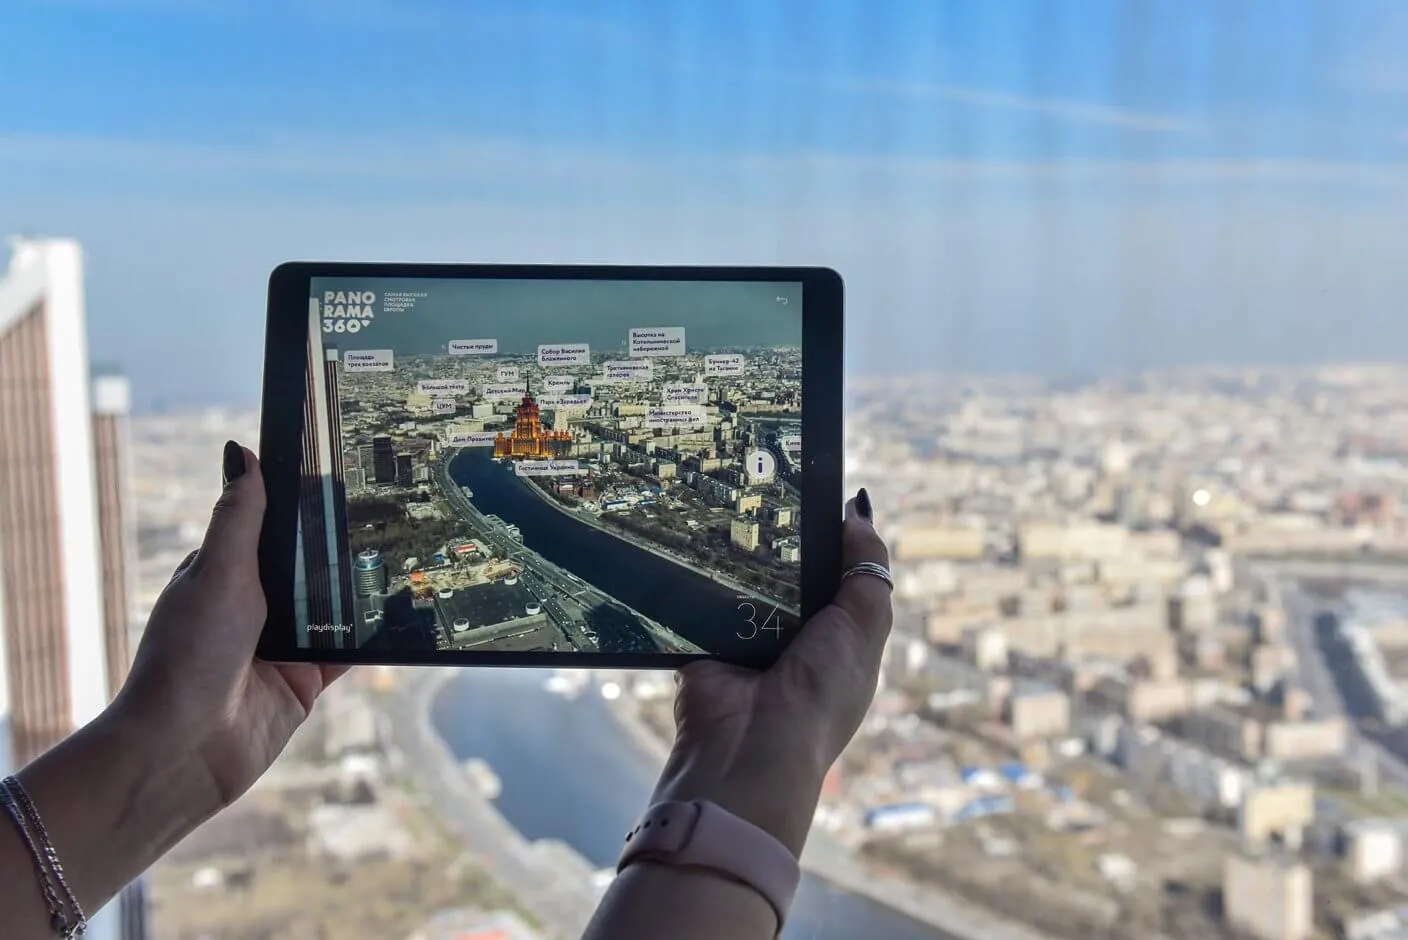 Смотровая площадка Панорама 360 в Москва-Сити, вид 6